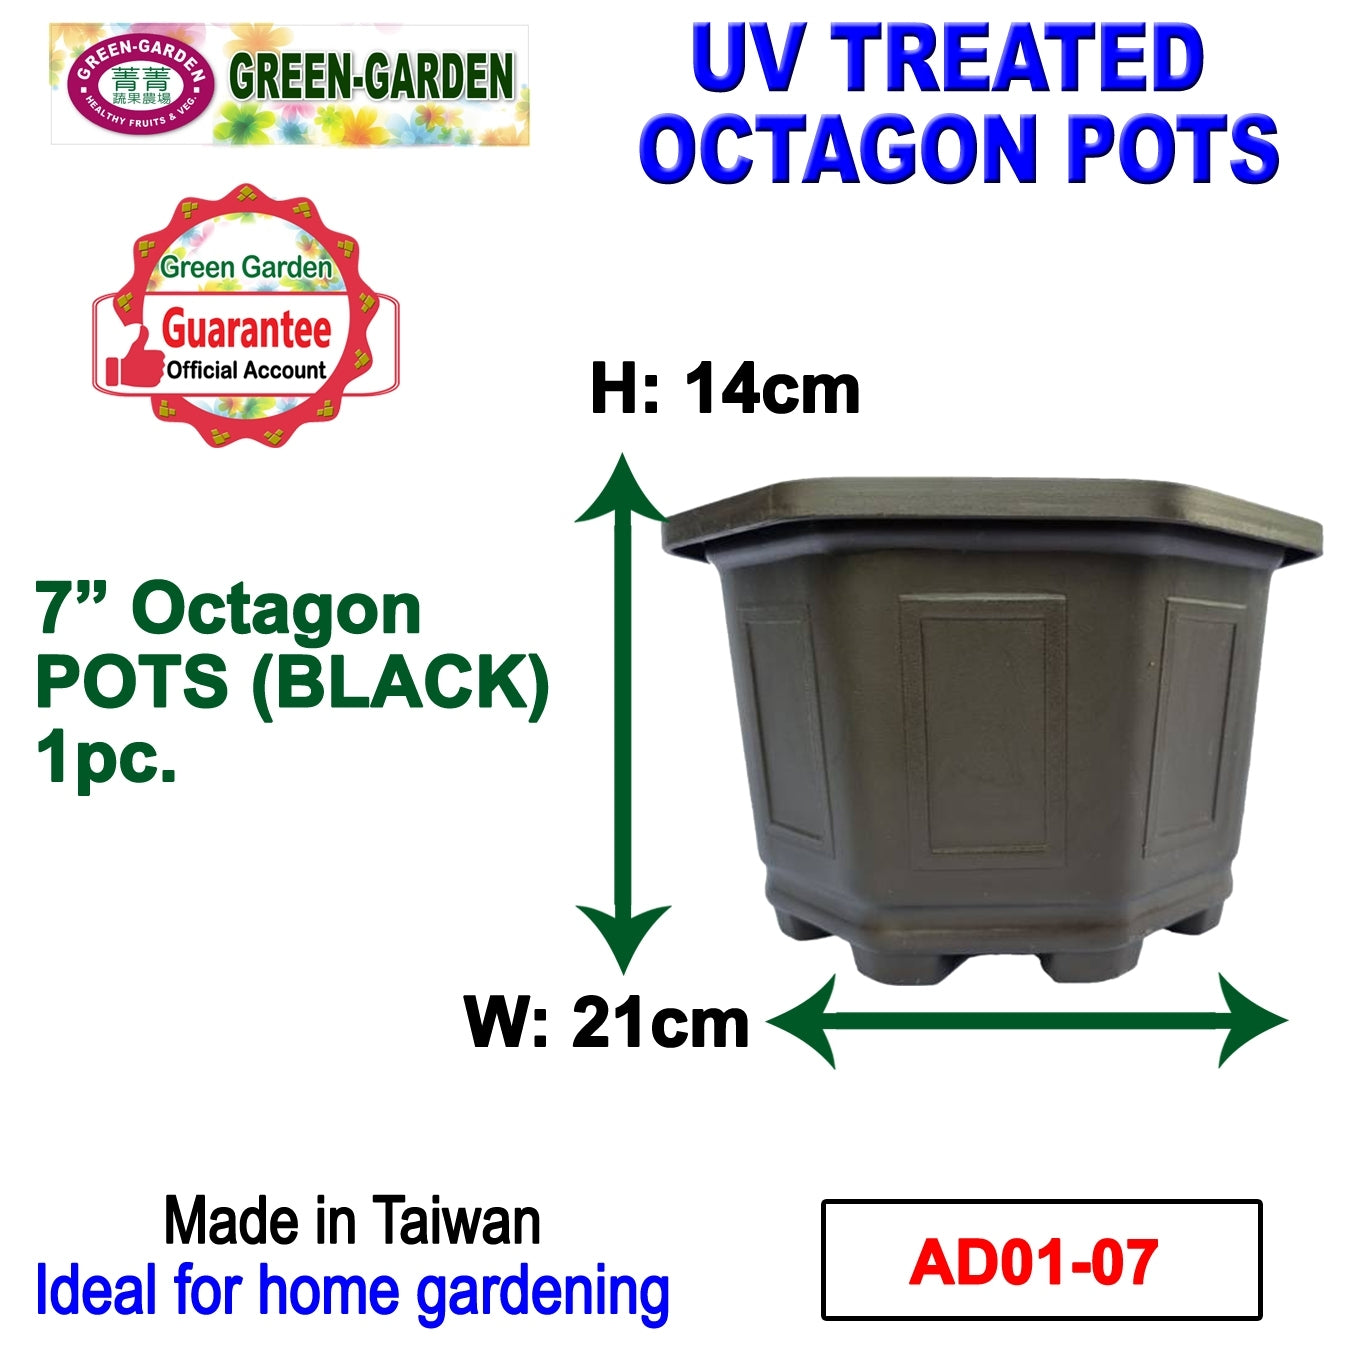 UV TREATED Octagonal Pot 7"